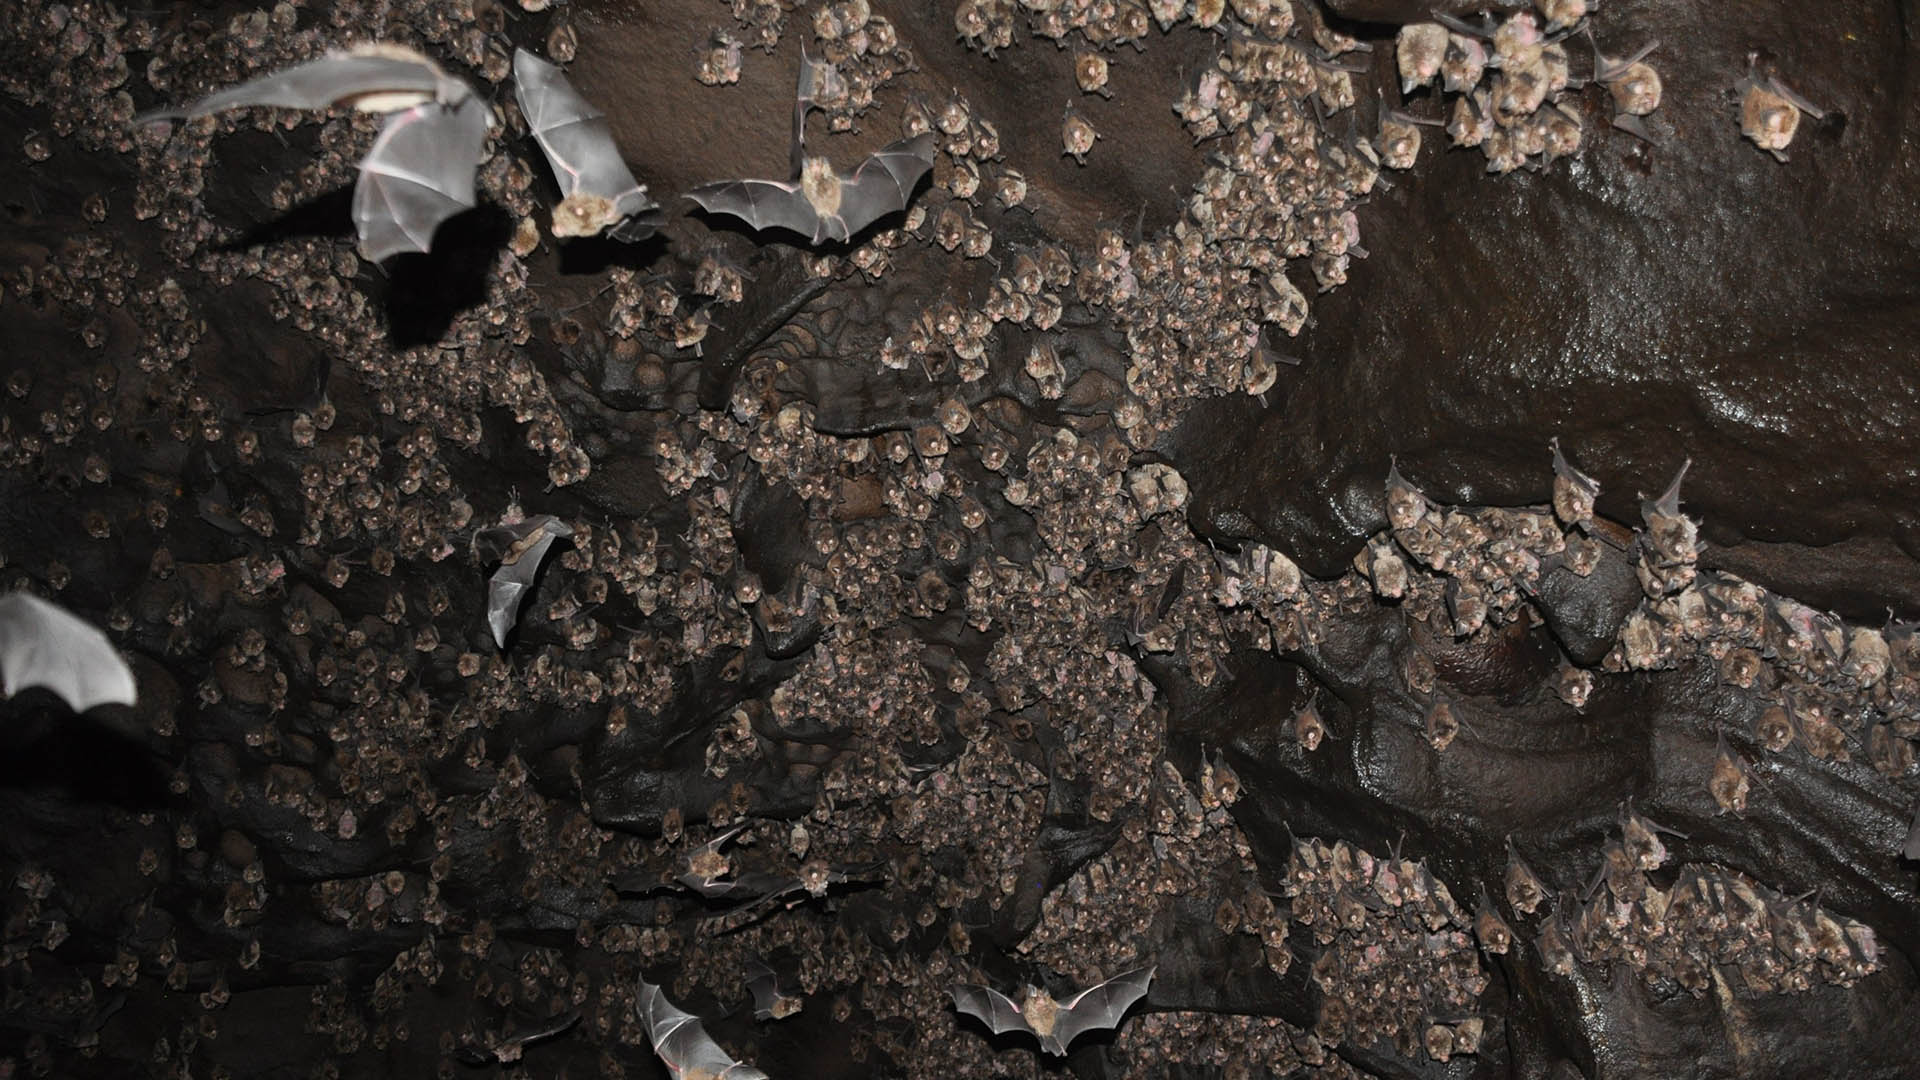 eastern horseshoe bats  (Rhinolophus megaphyllus) in a cave in NSW. Picture: Mike Morley, Flinders University